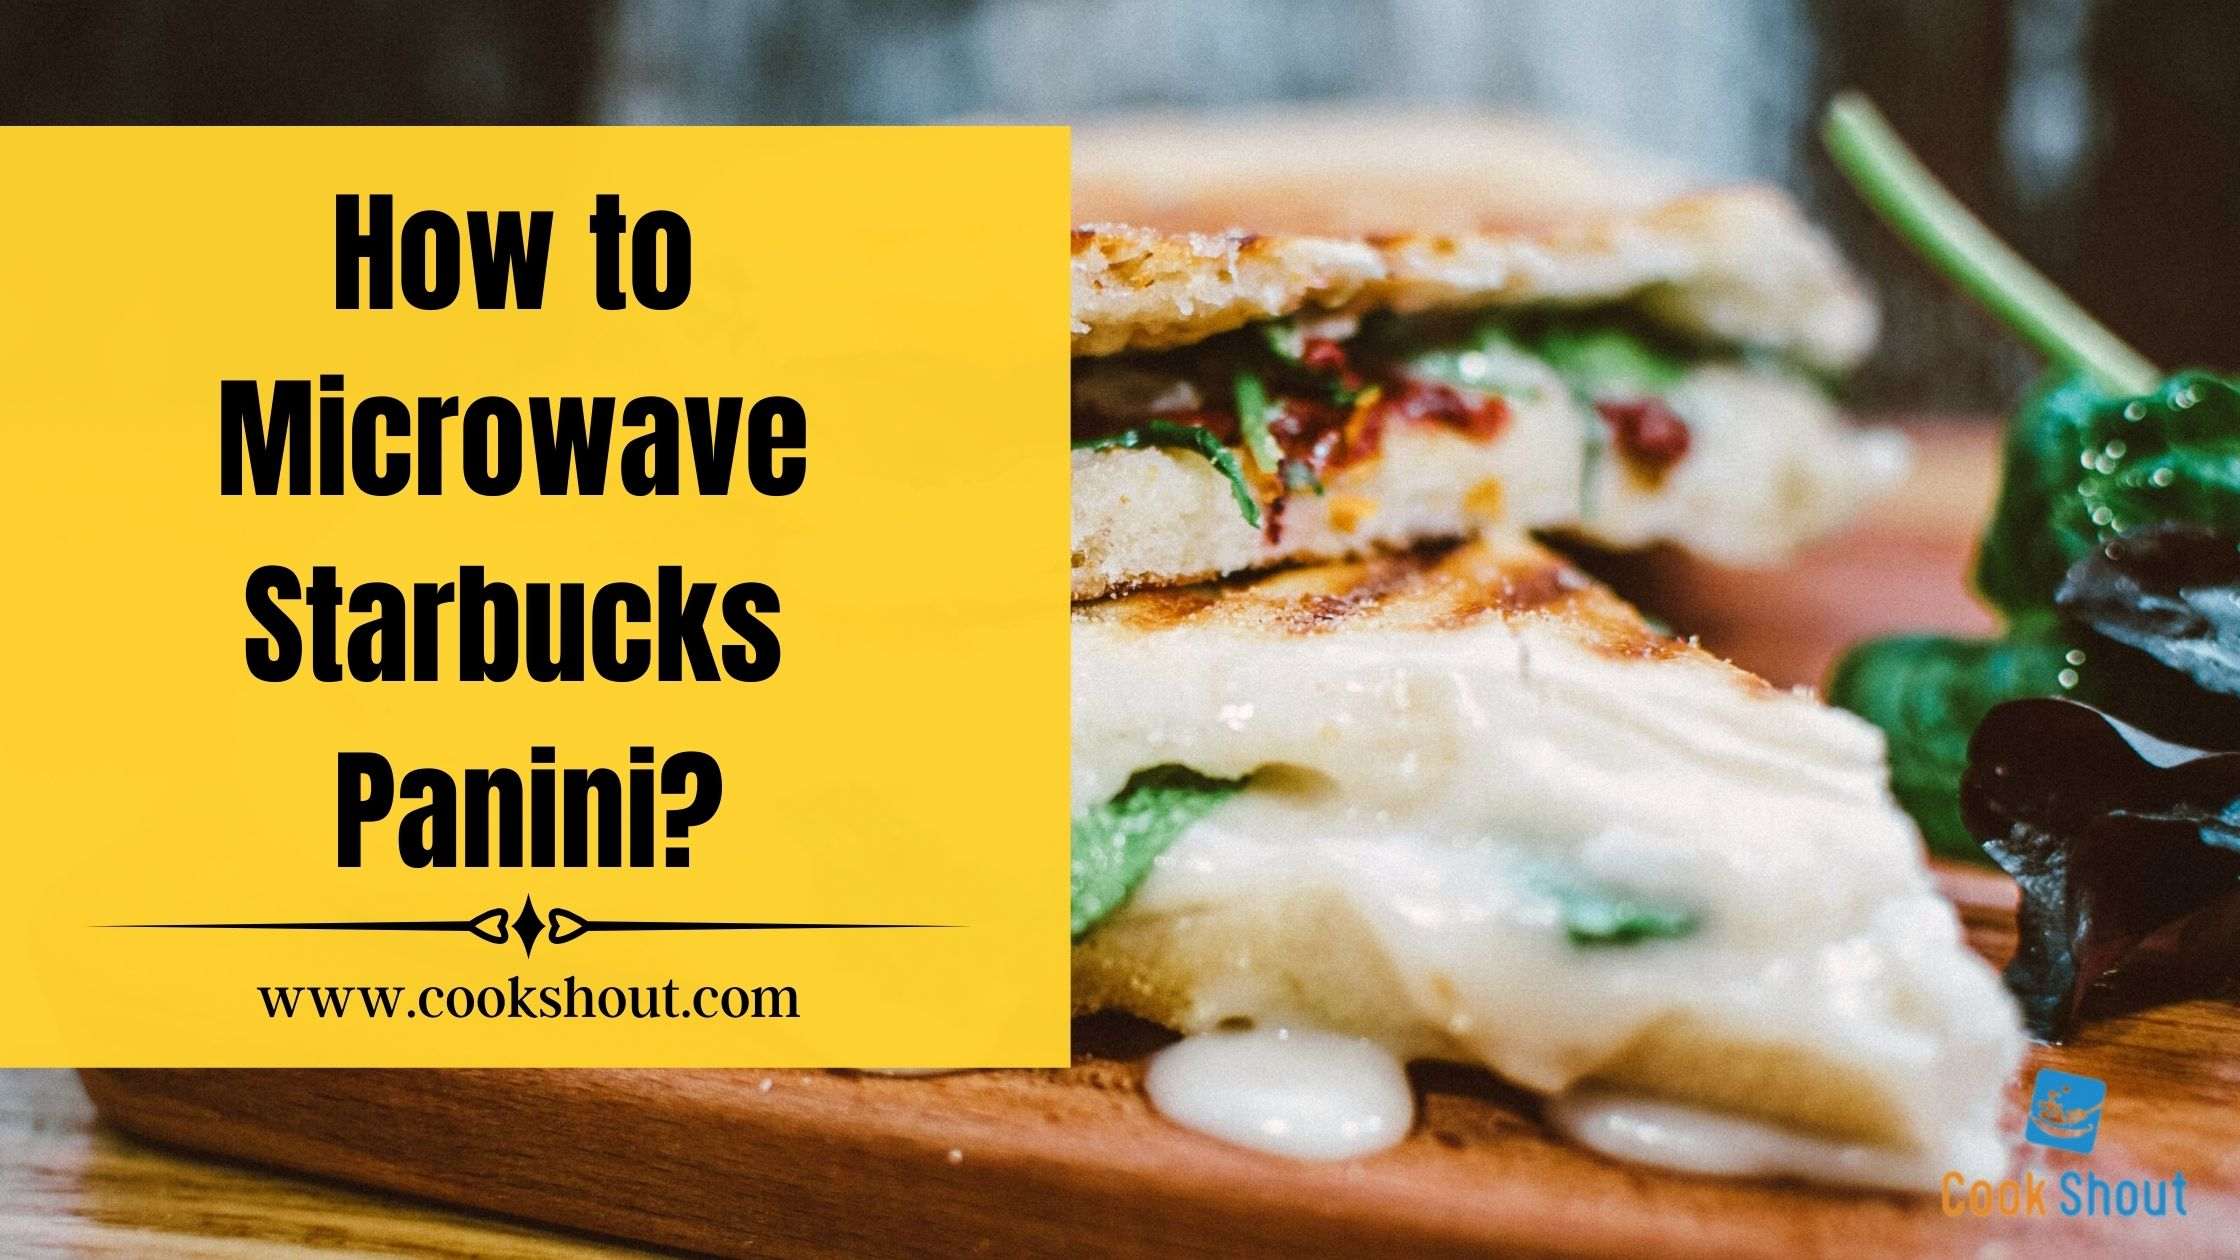 How to Microwave Starbucks Panini